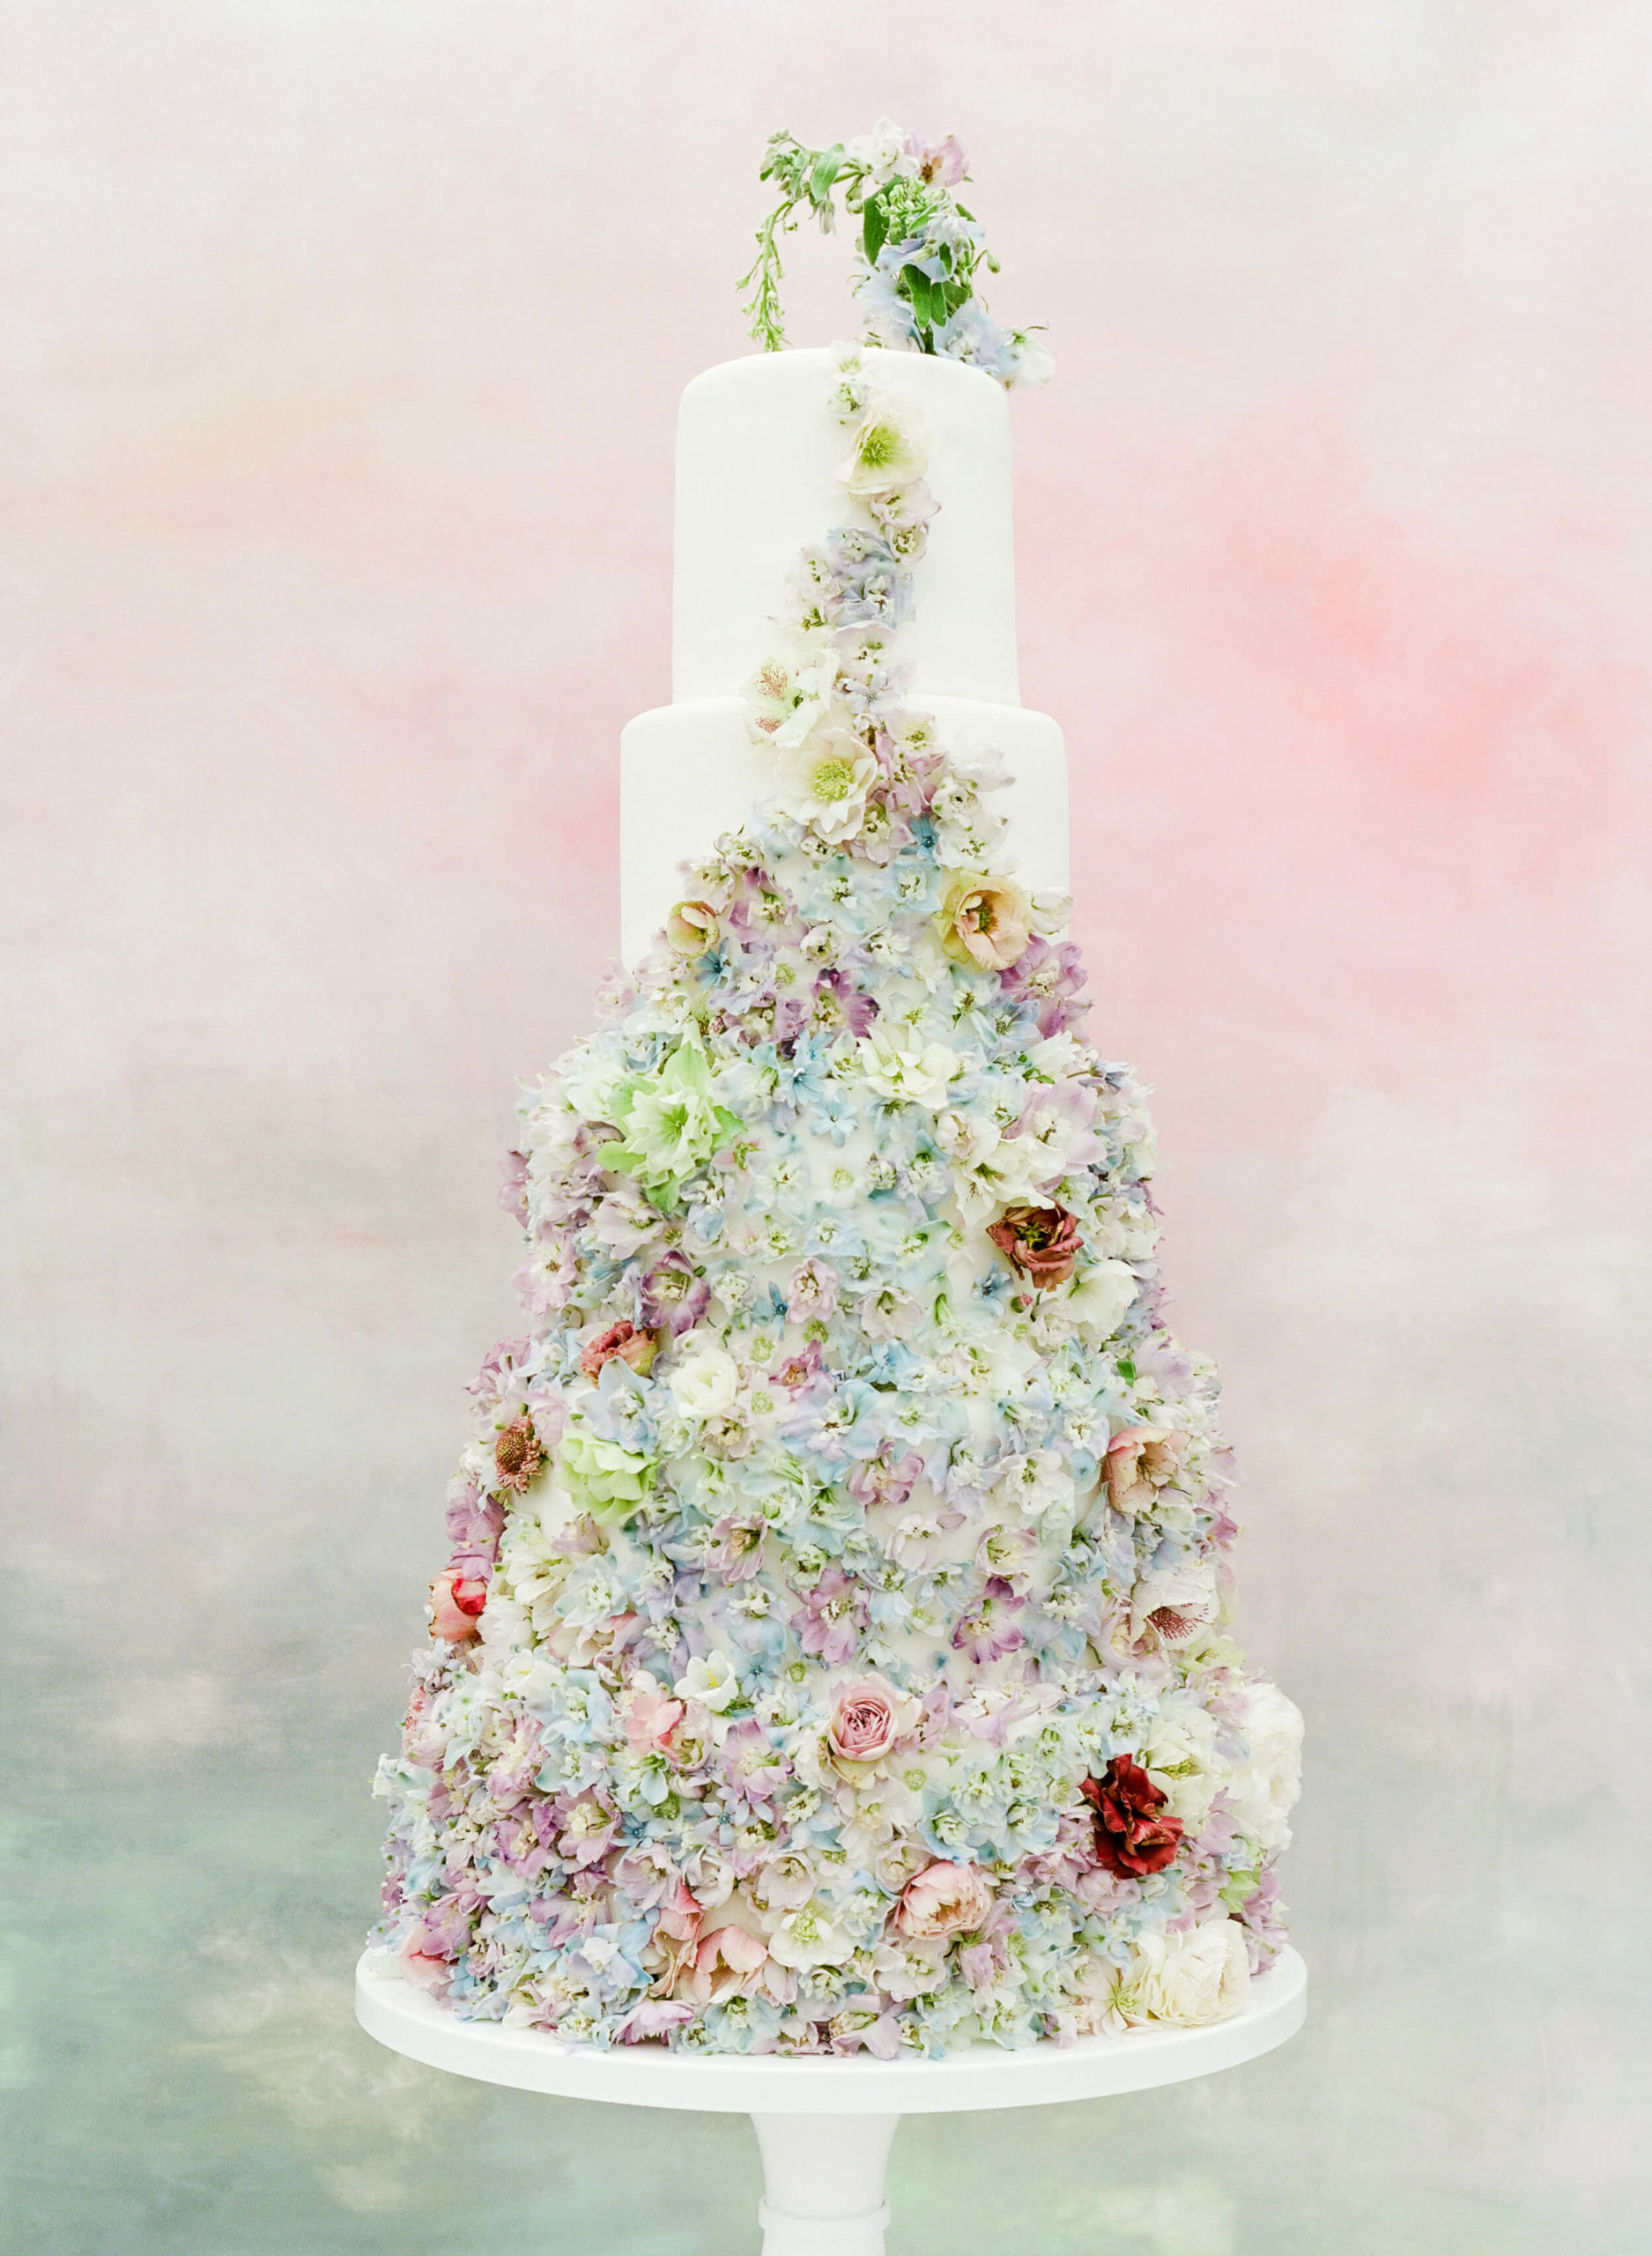 Use real seasonal flowers on wedding cake to give back through your wedding